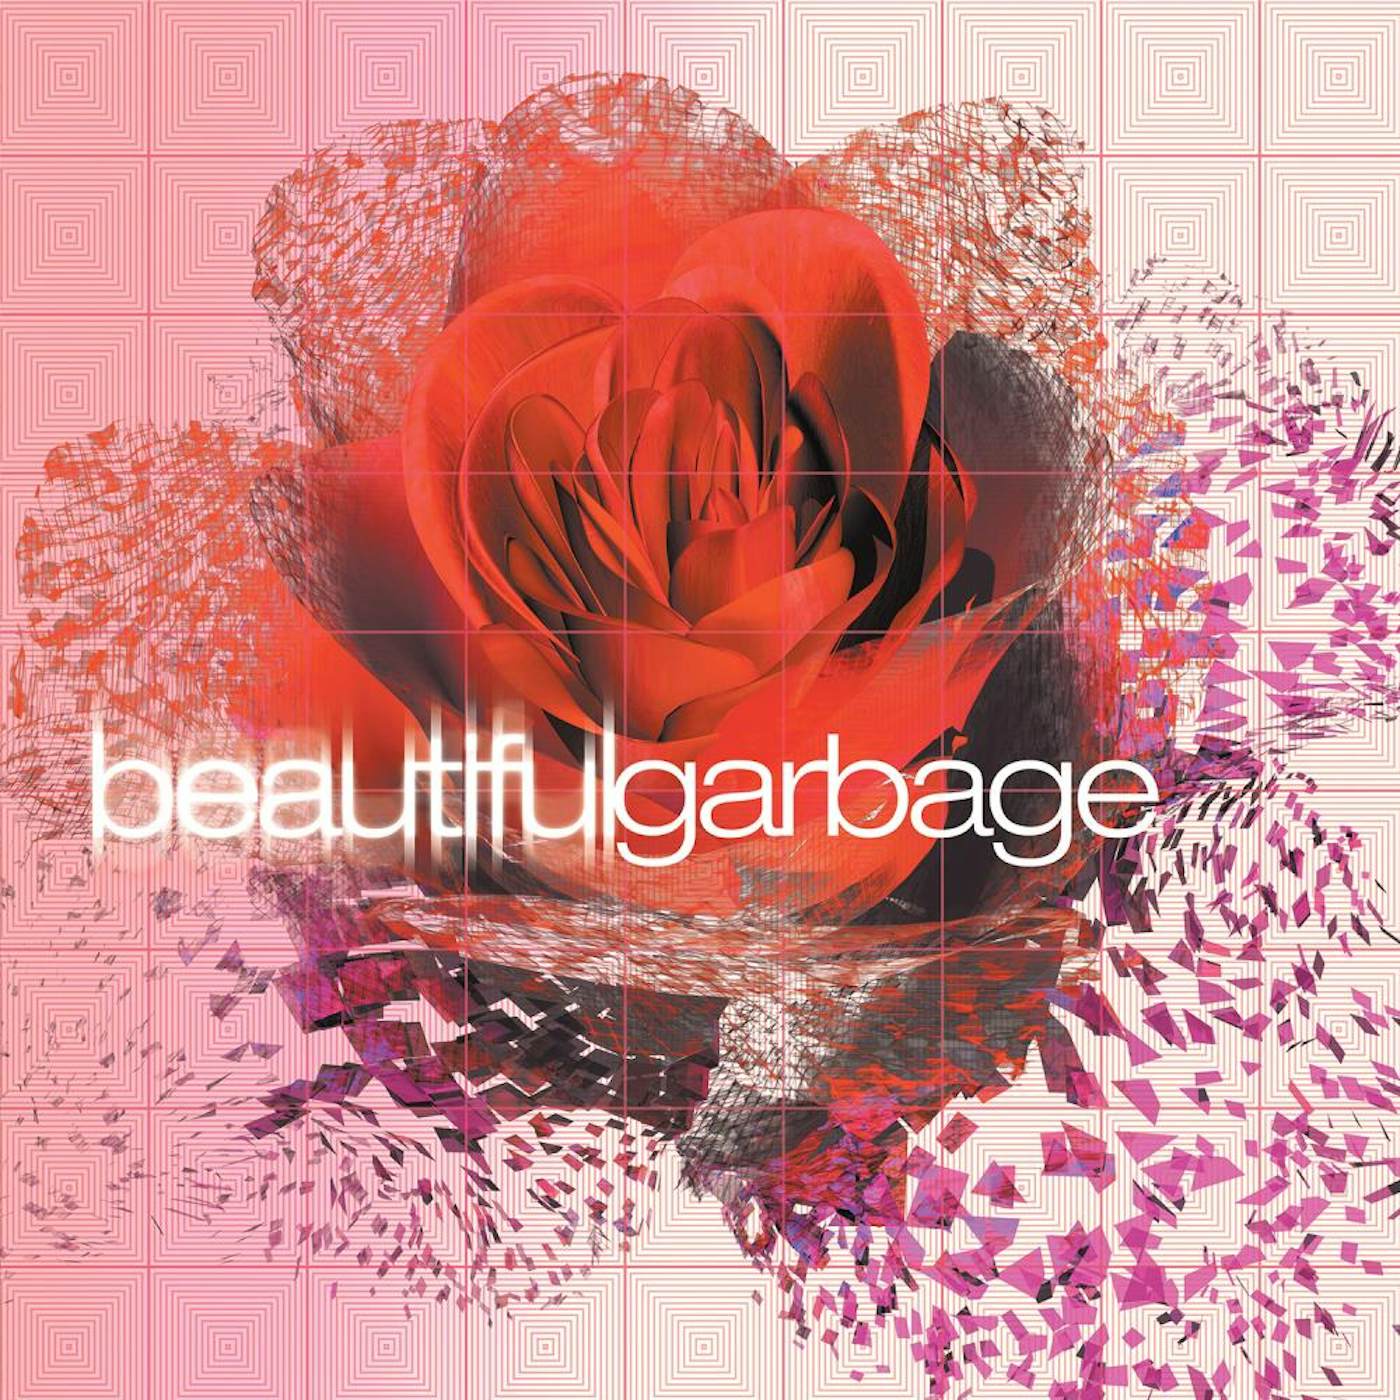 BEAUTIFULGARBAGE (20TH ANNIVERSARY/DELUXE/3CD) CD